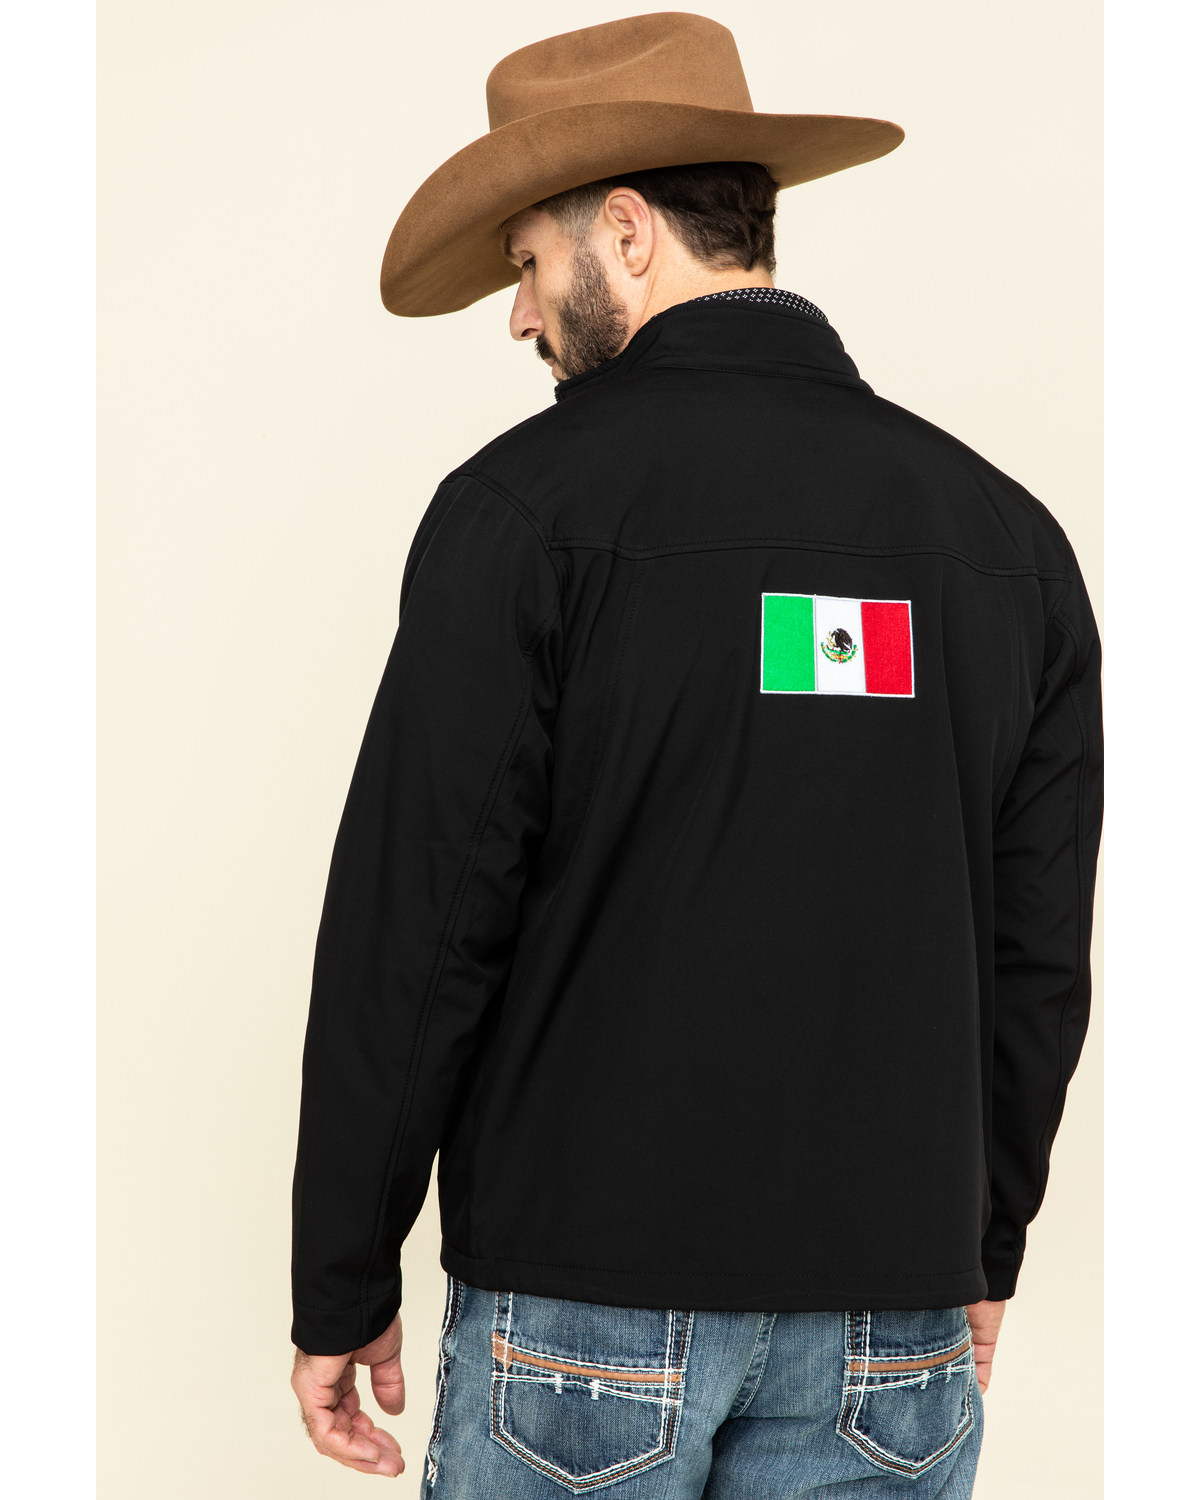 Ariat Men's Mexico Flag Team Softshell Jacket